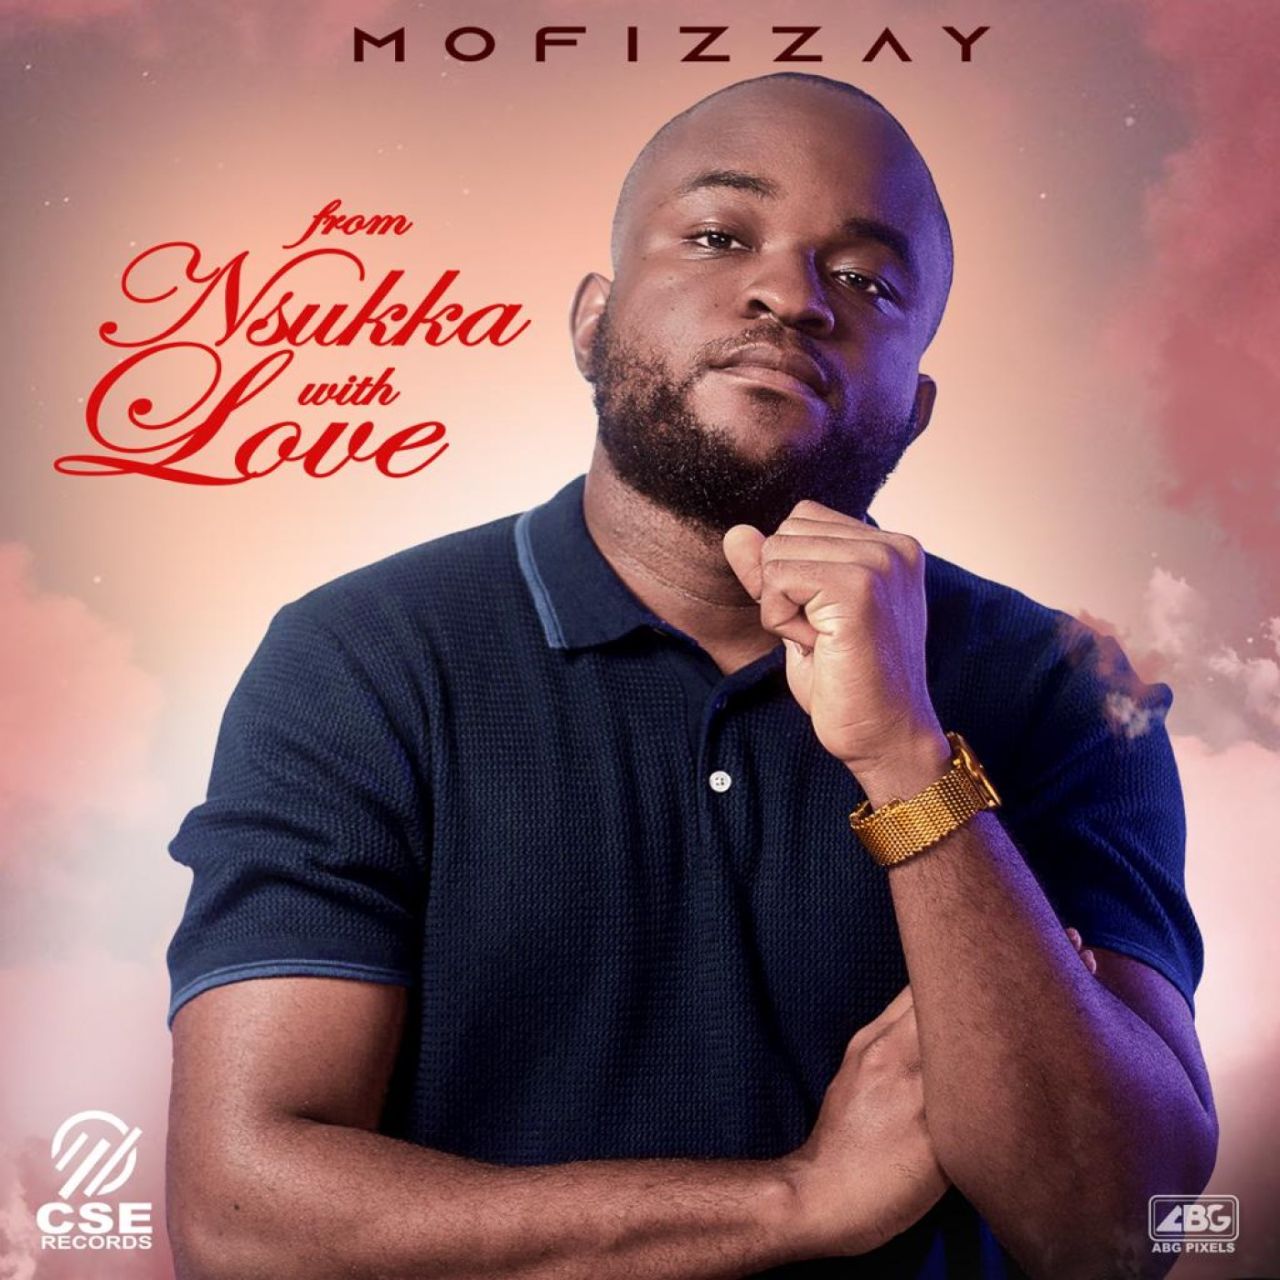 Mofizzay - From Nsukka With Love